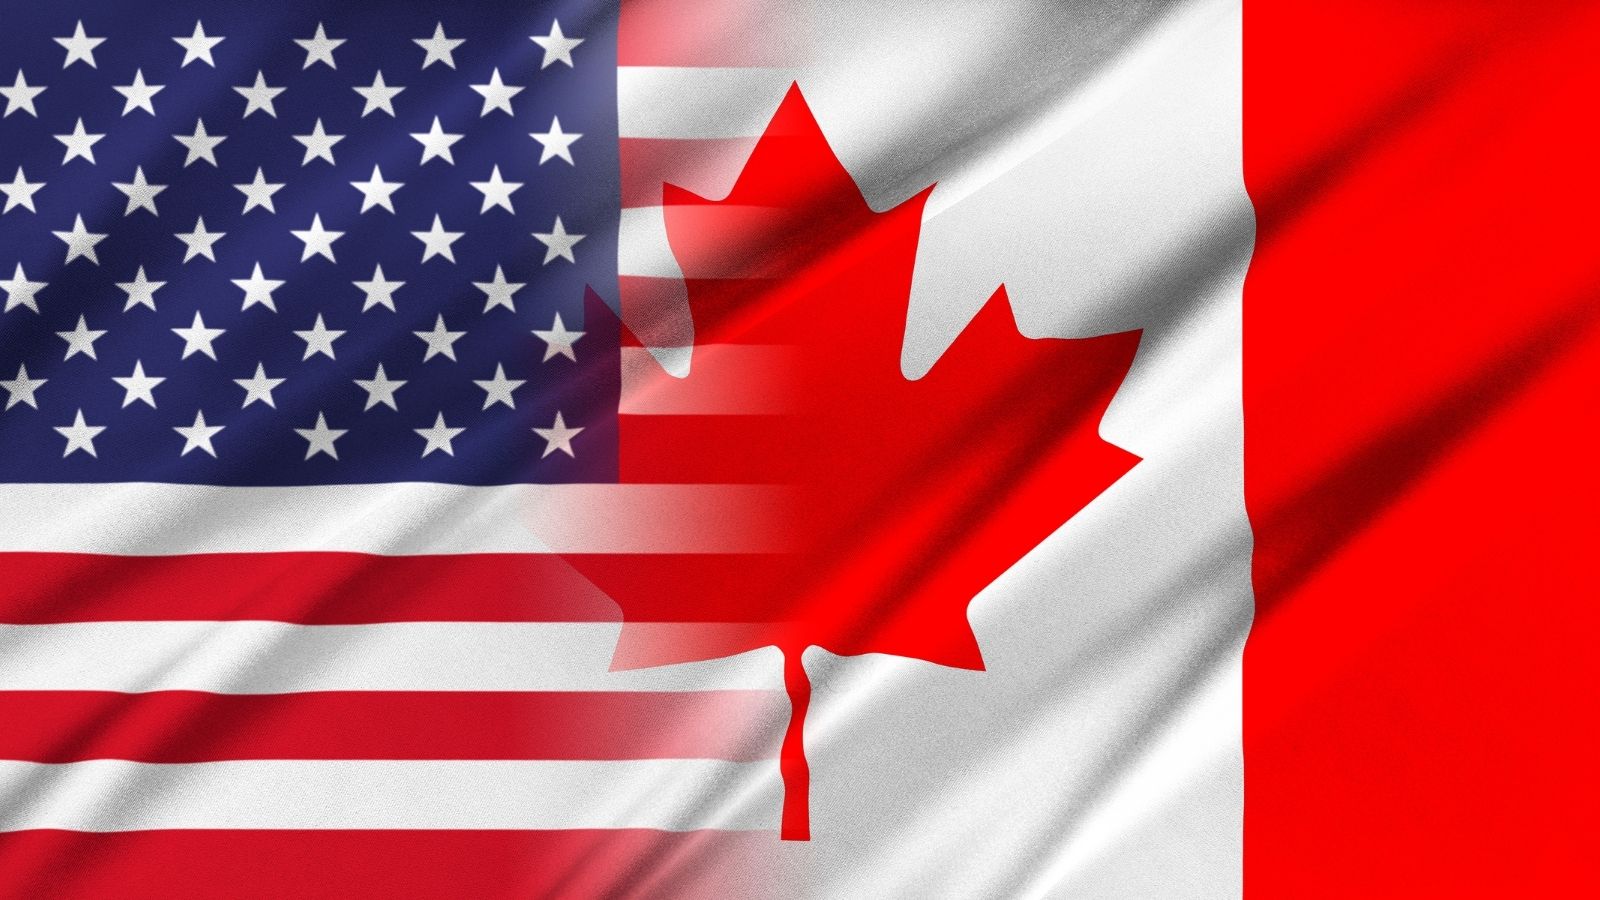 Canadas Startup Visa vs United States International Entrepreneur Parole